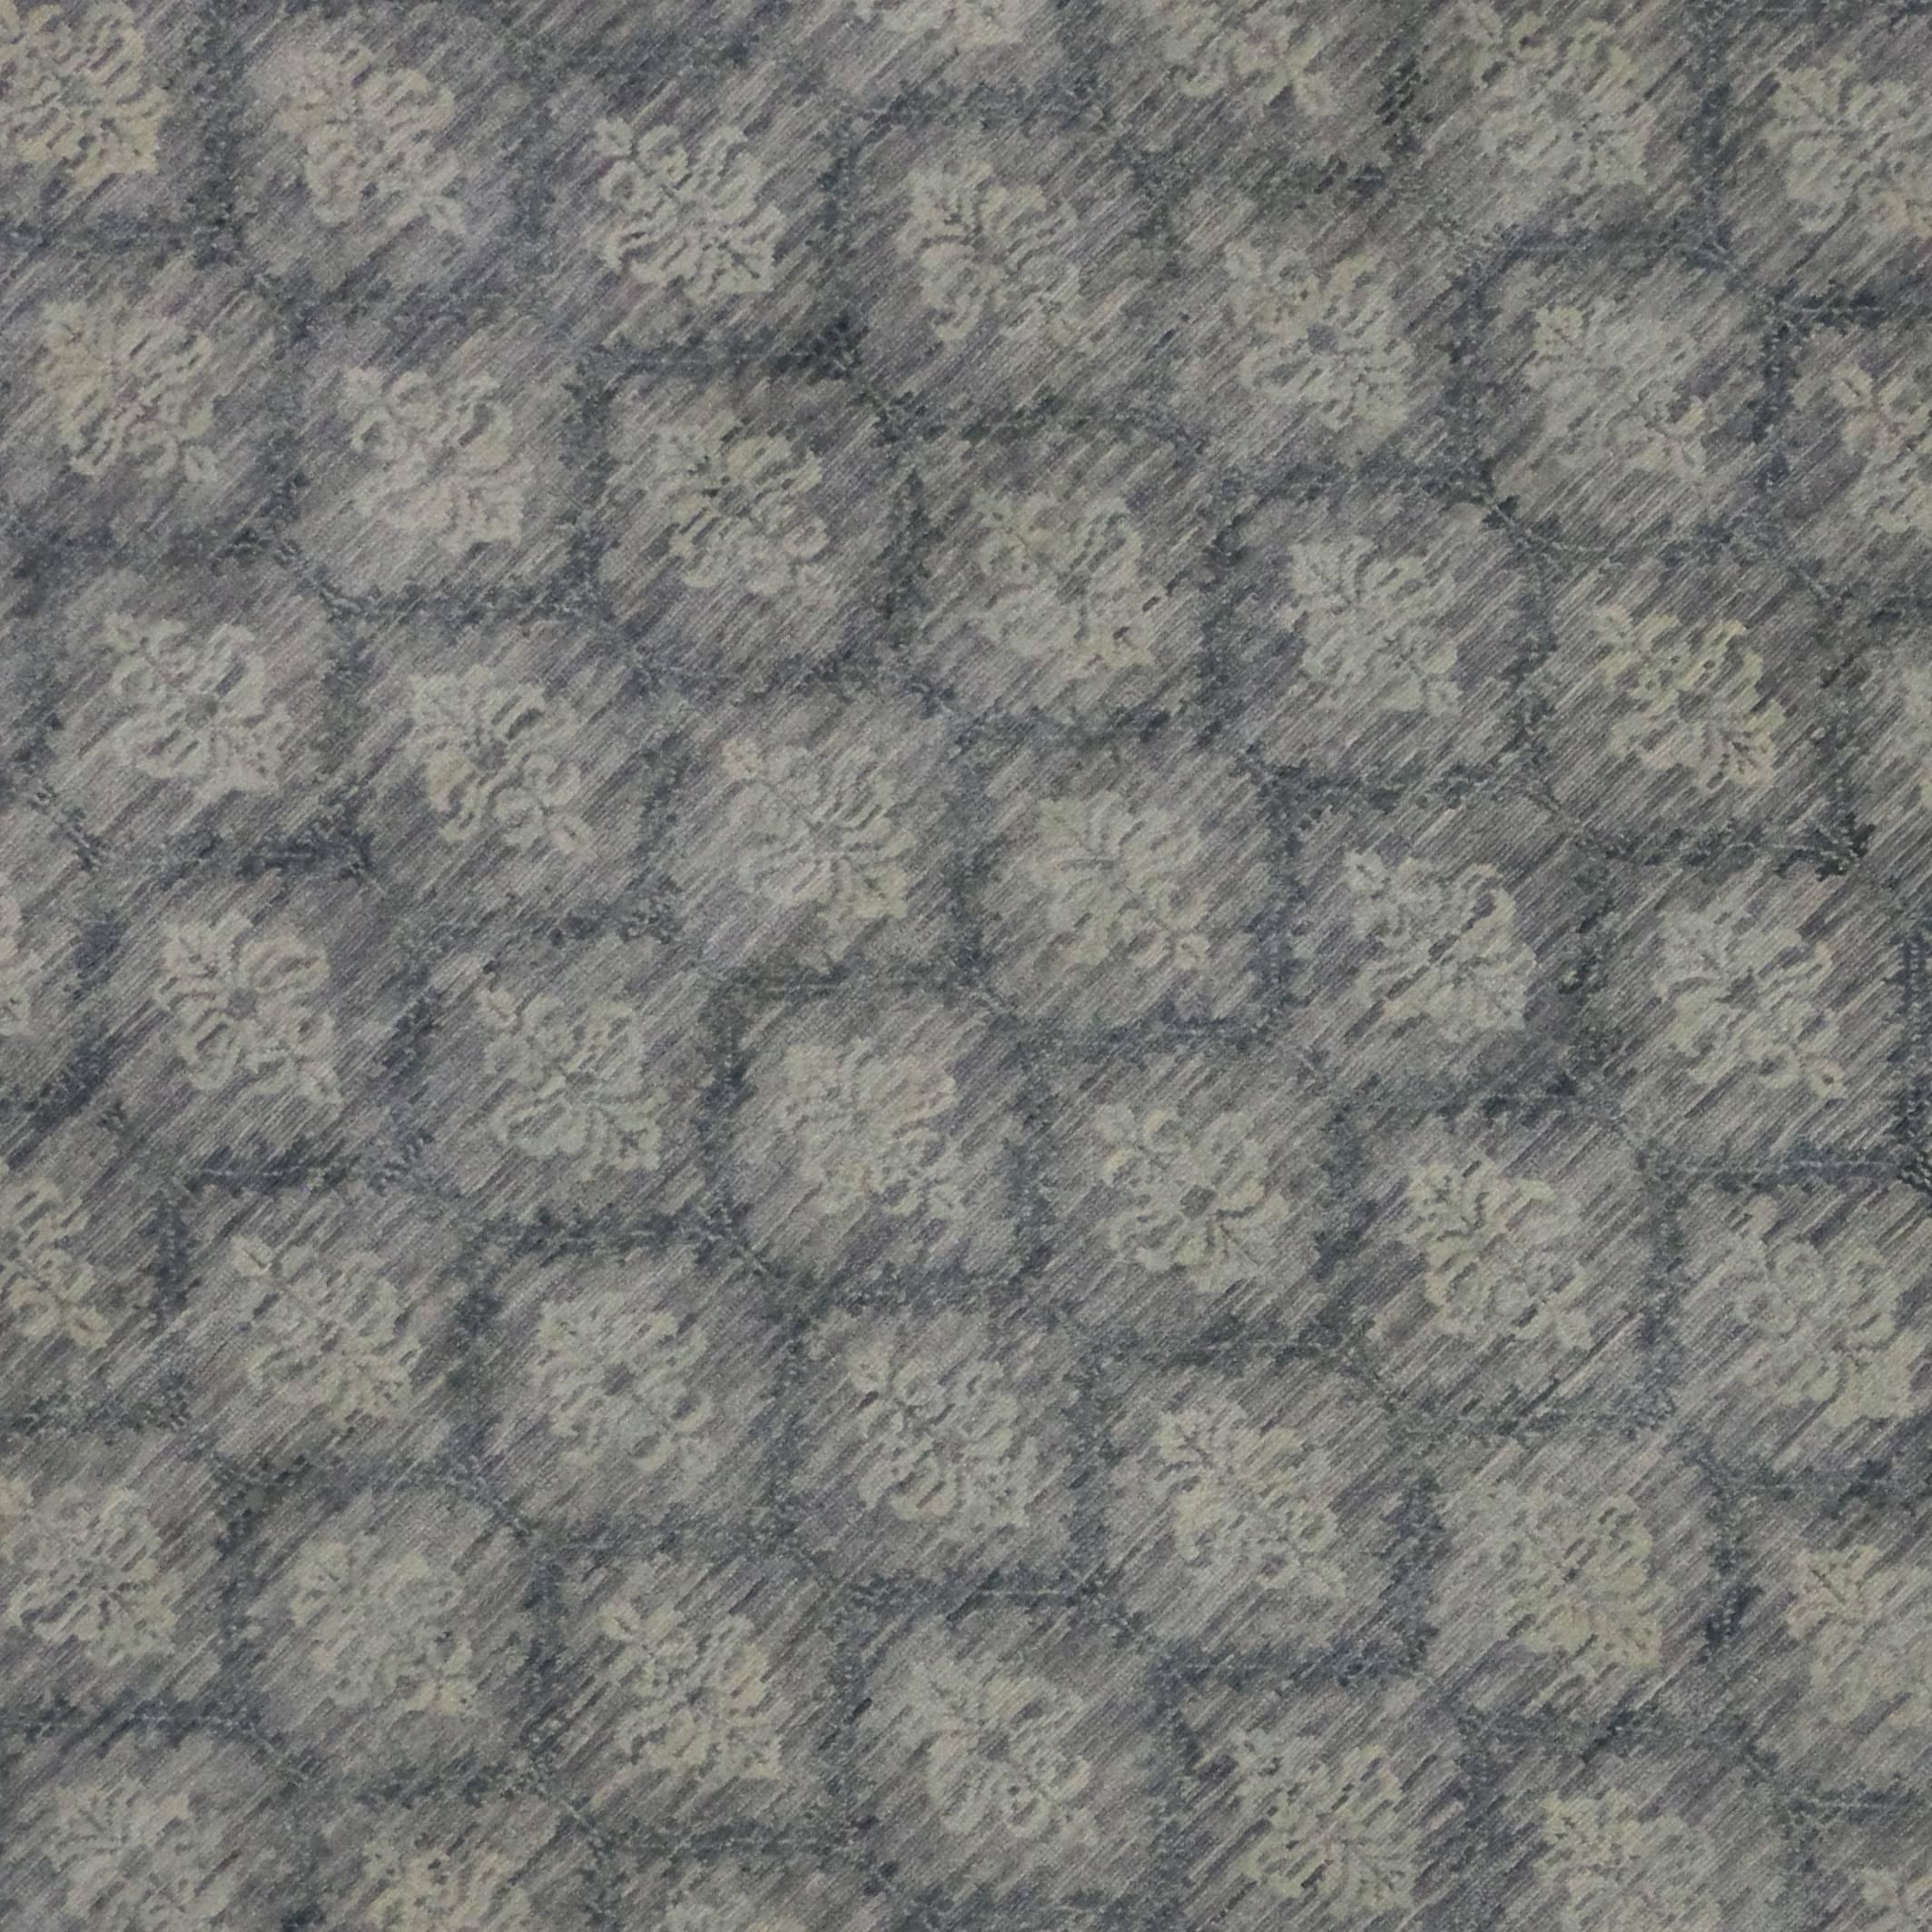 black and white damask area rug